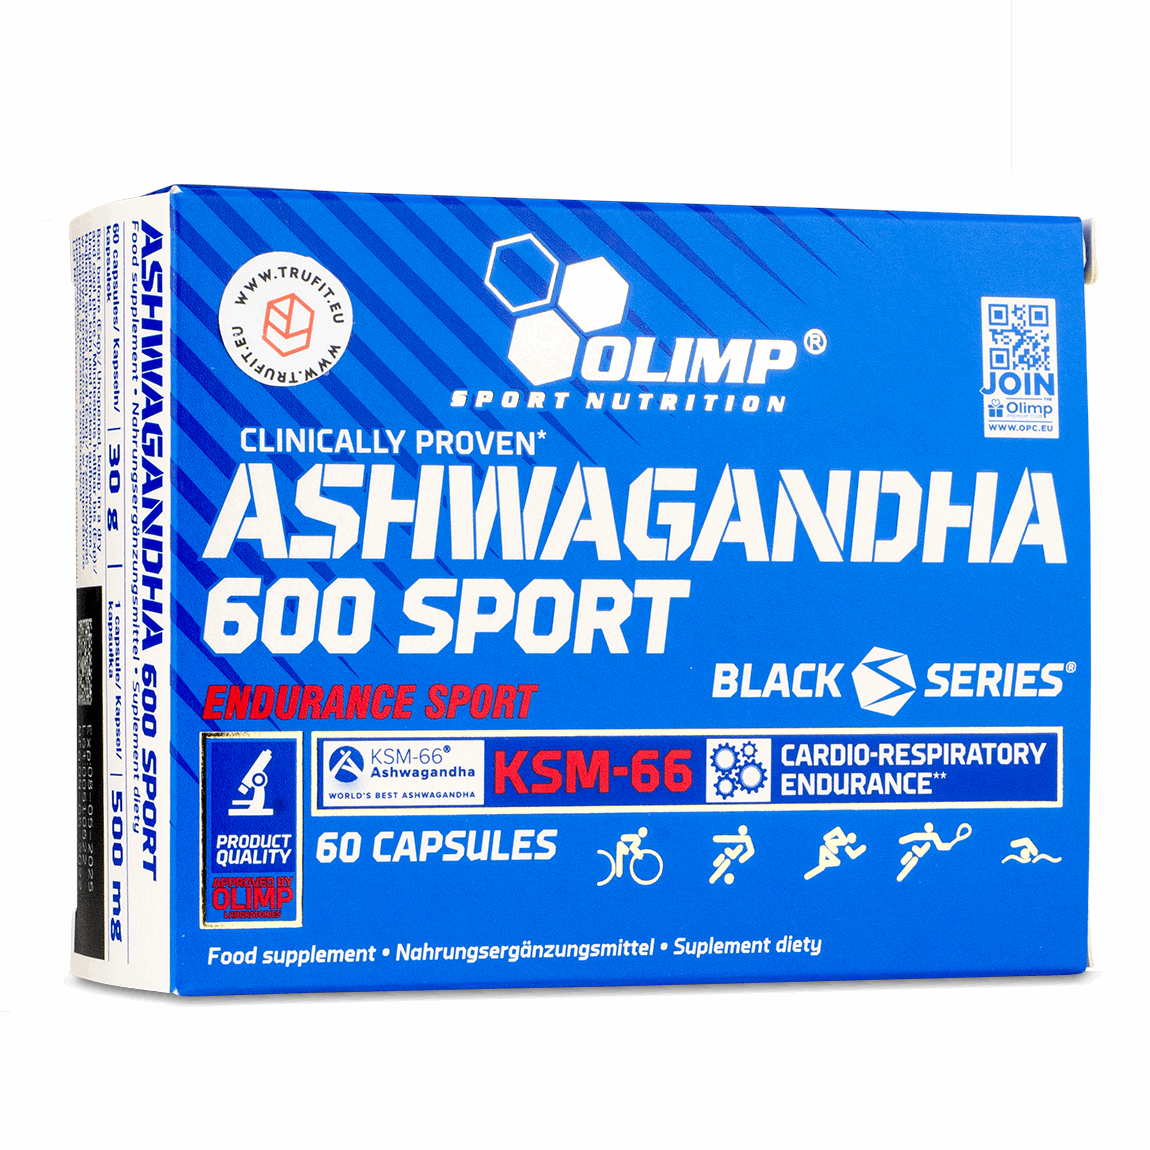 Ashwagandha 600 Sport 60 capsules - OLIMP SPORT NUTRITION - Market Fit